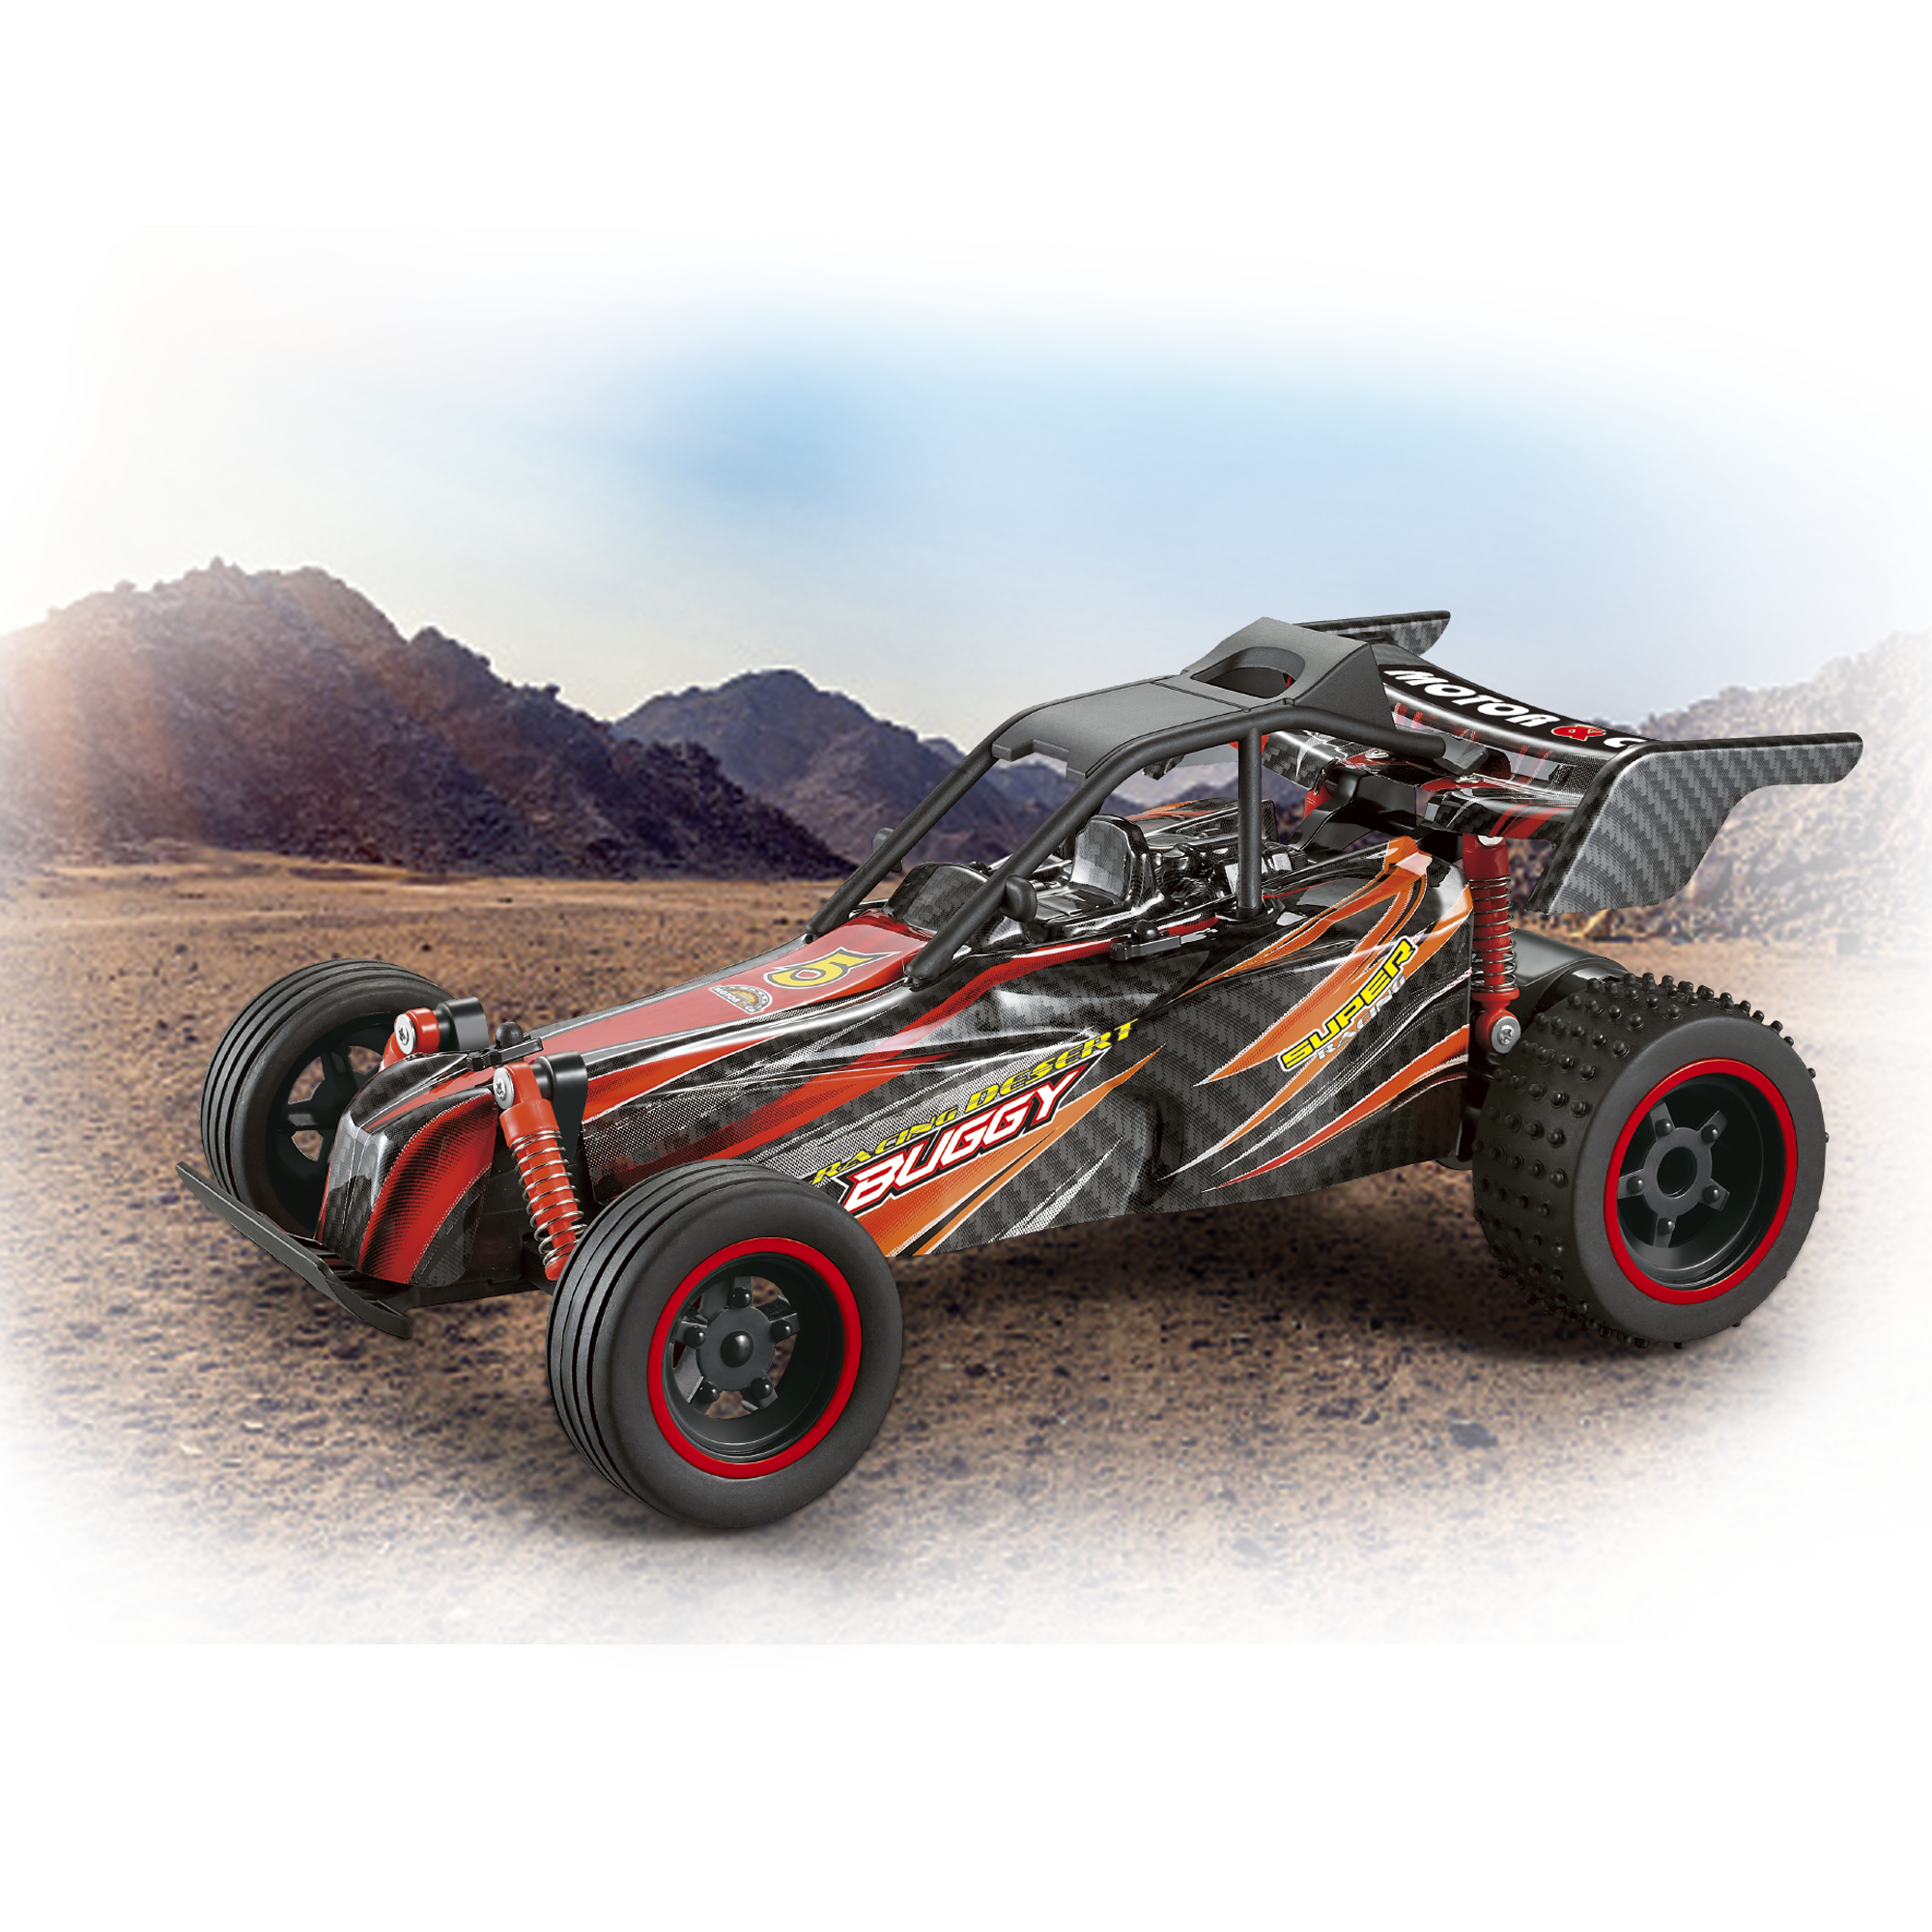 Auto r/c buggy desert - MOTOR & CO.